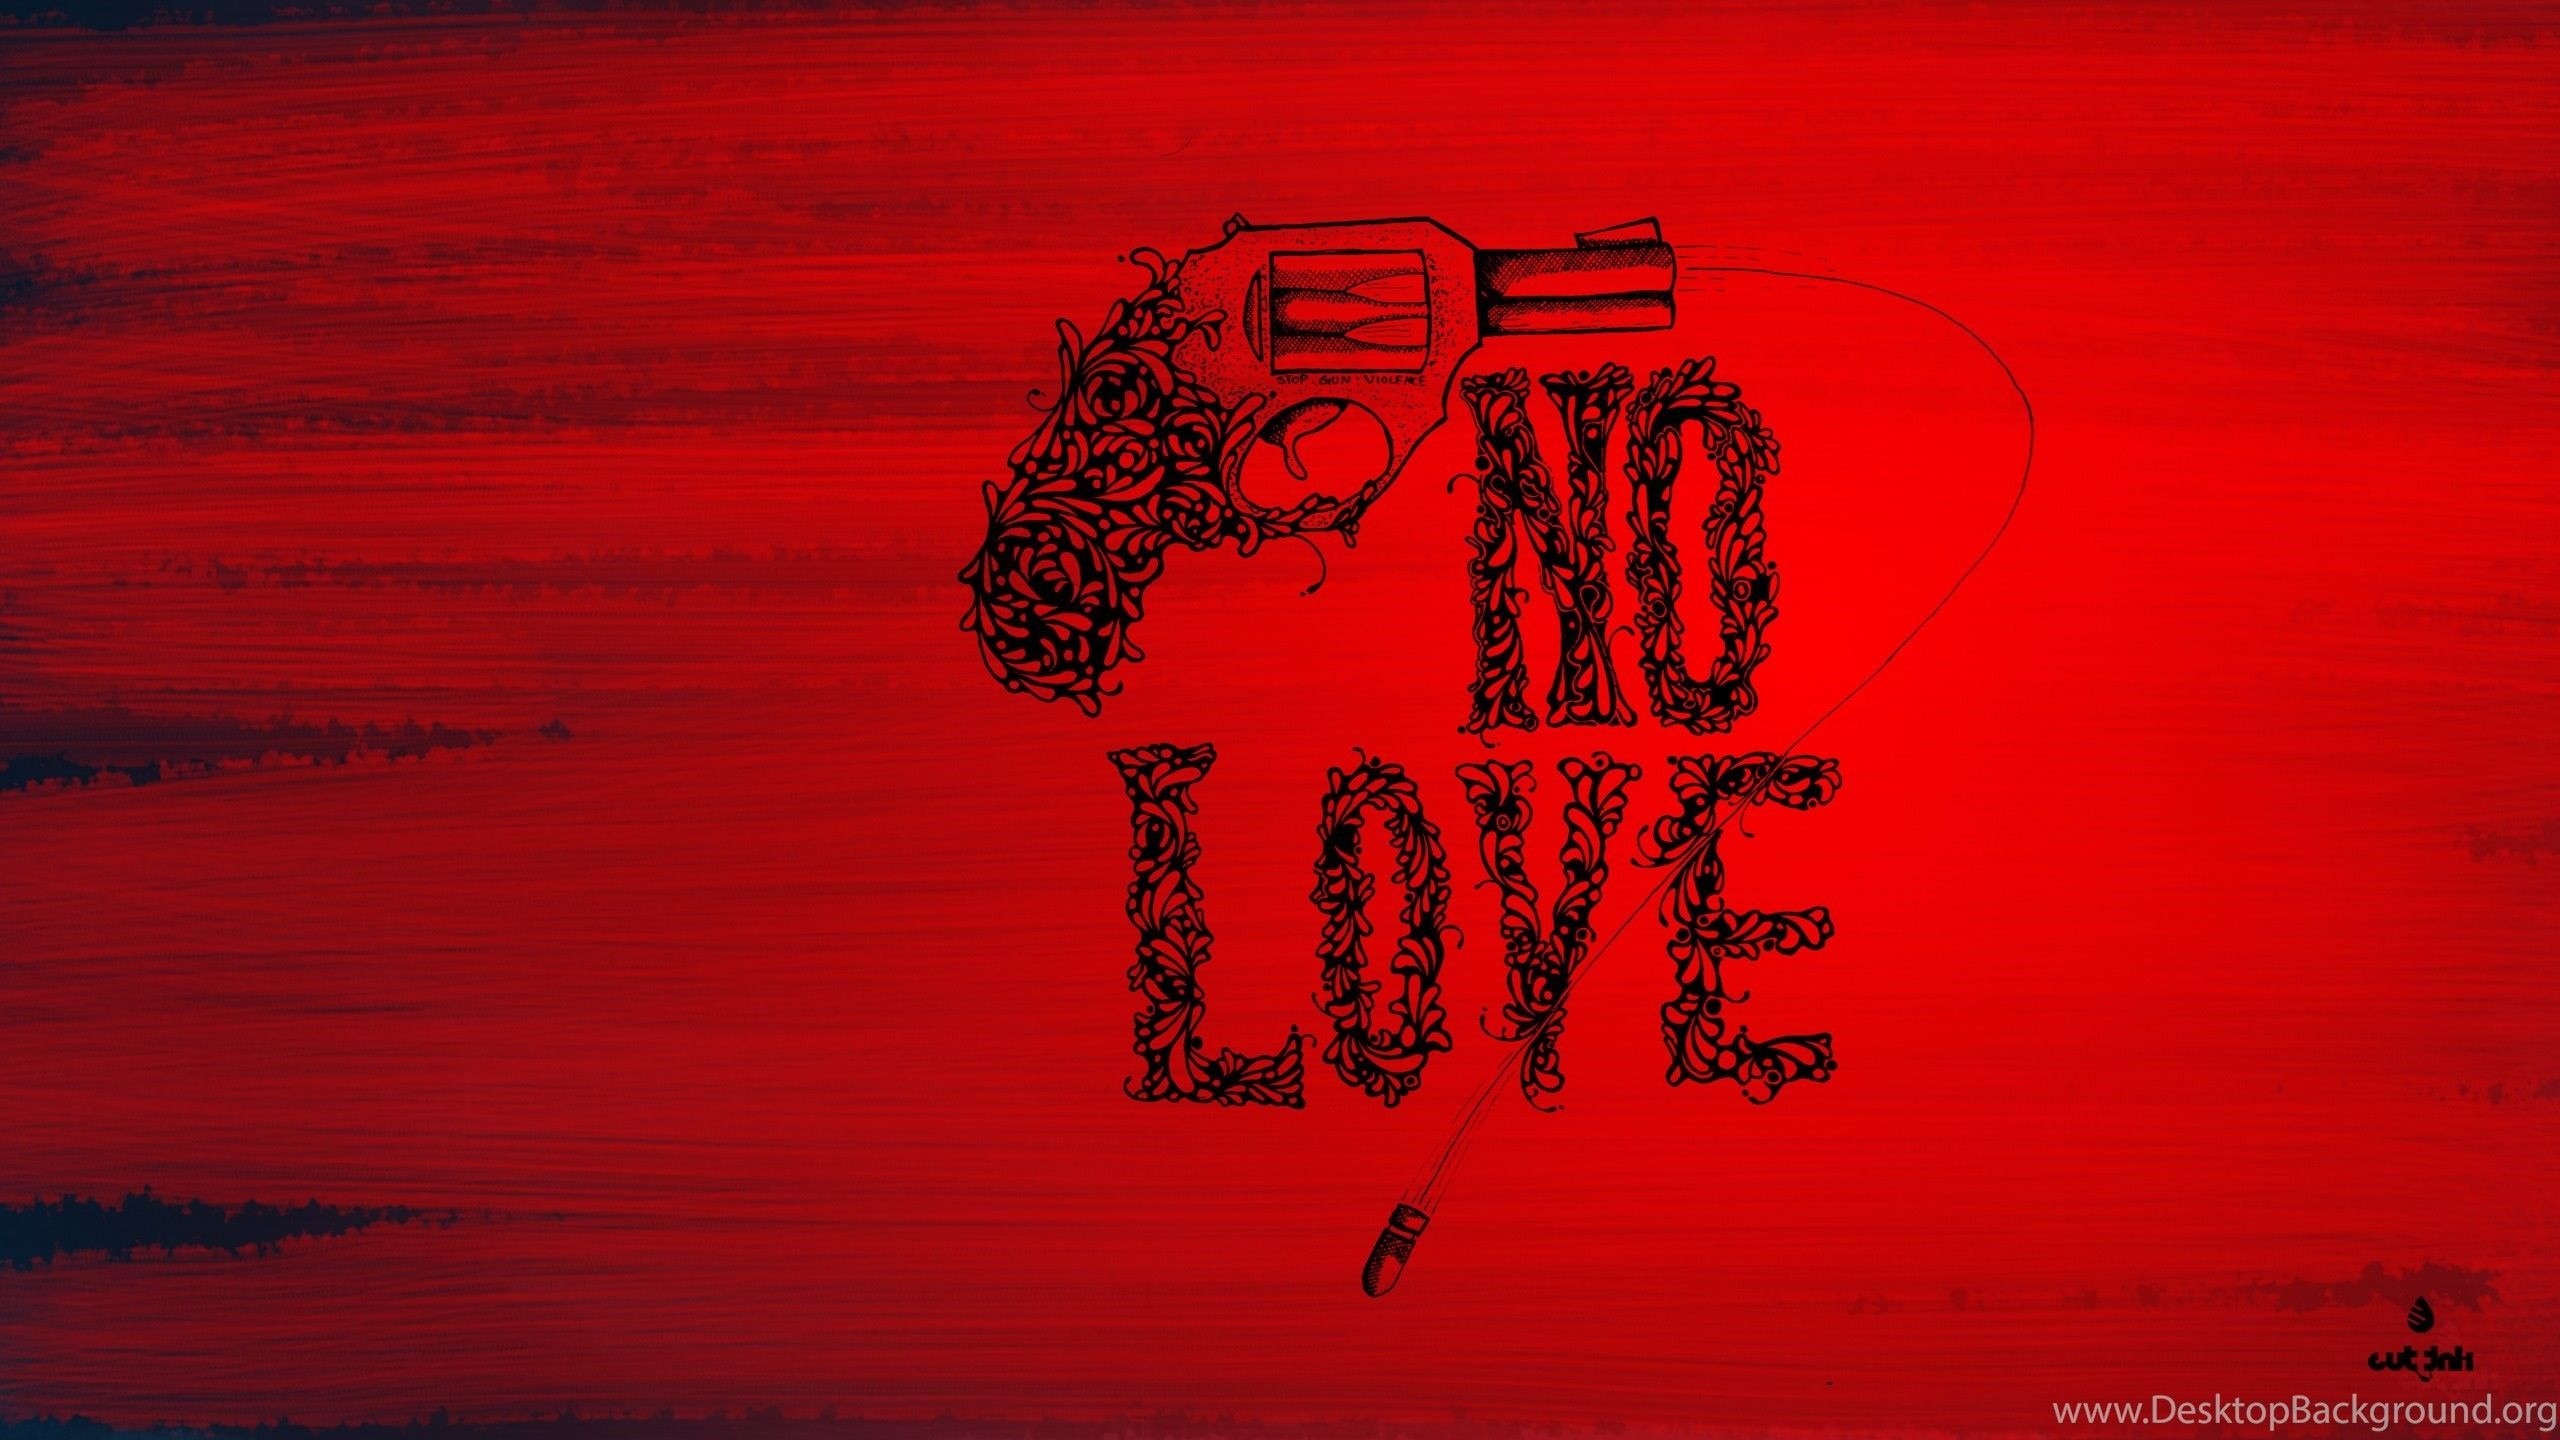 No Love - fake love